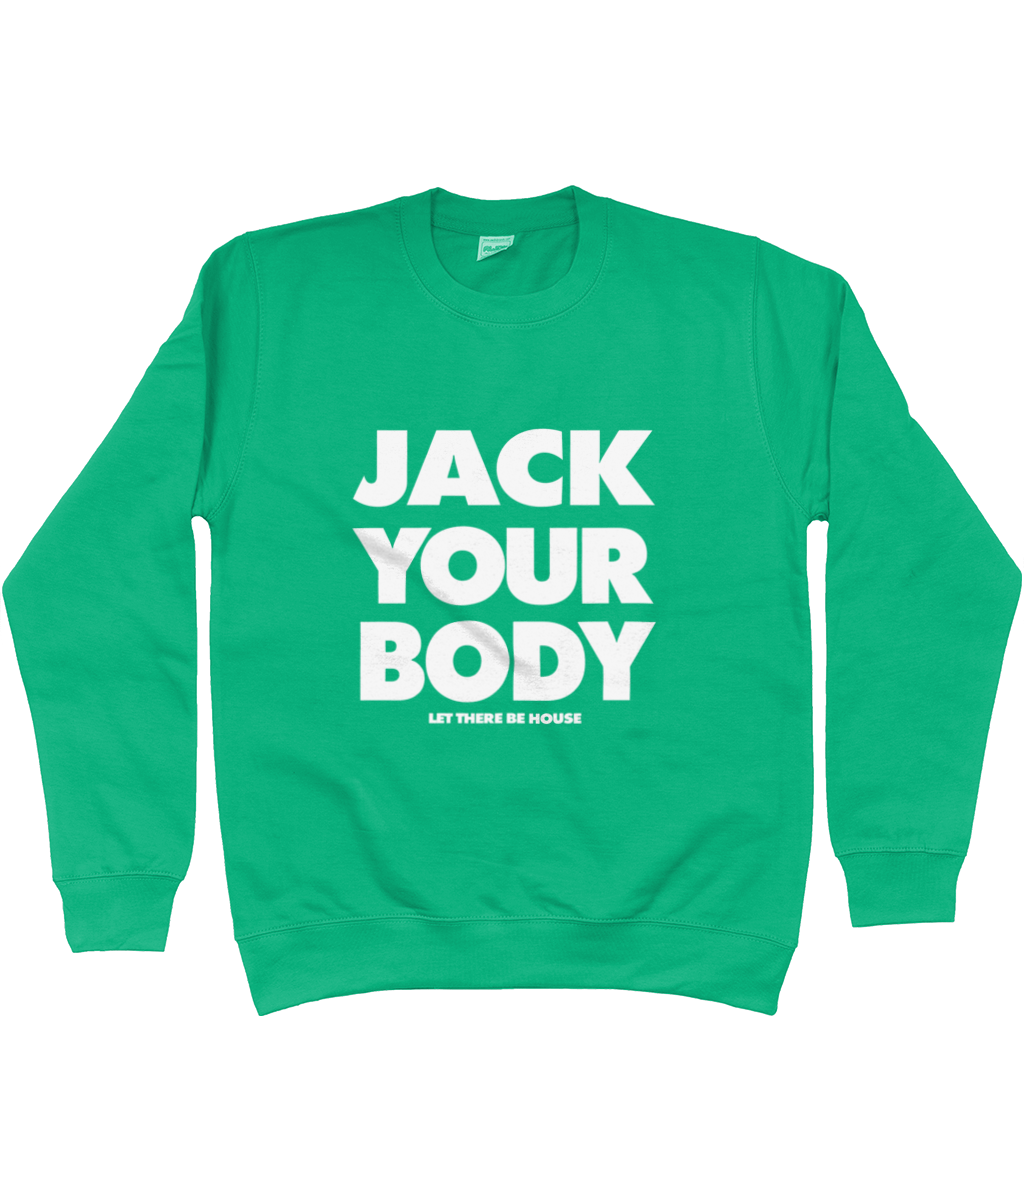 Sweatshirt Jack Body White